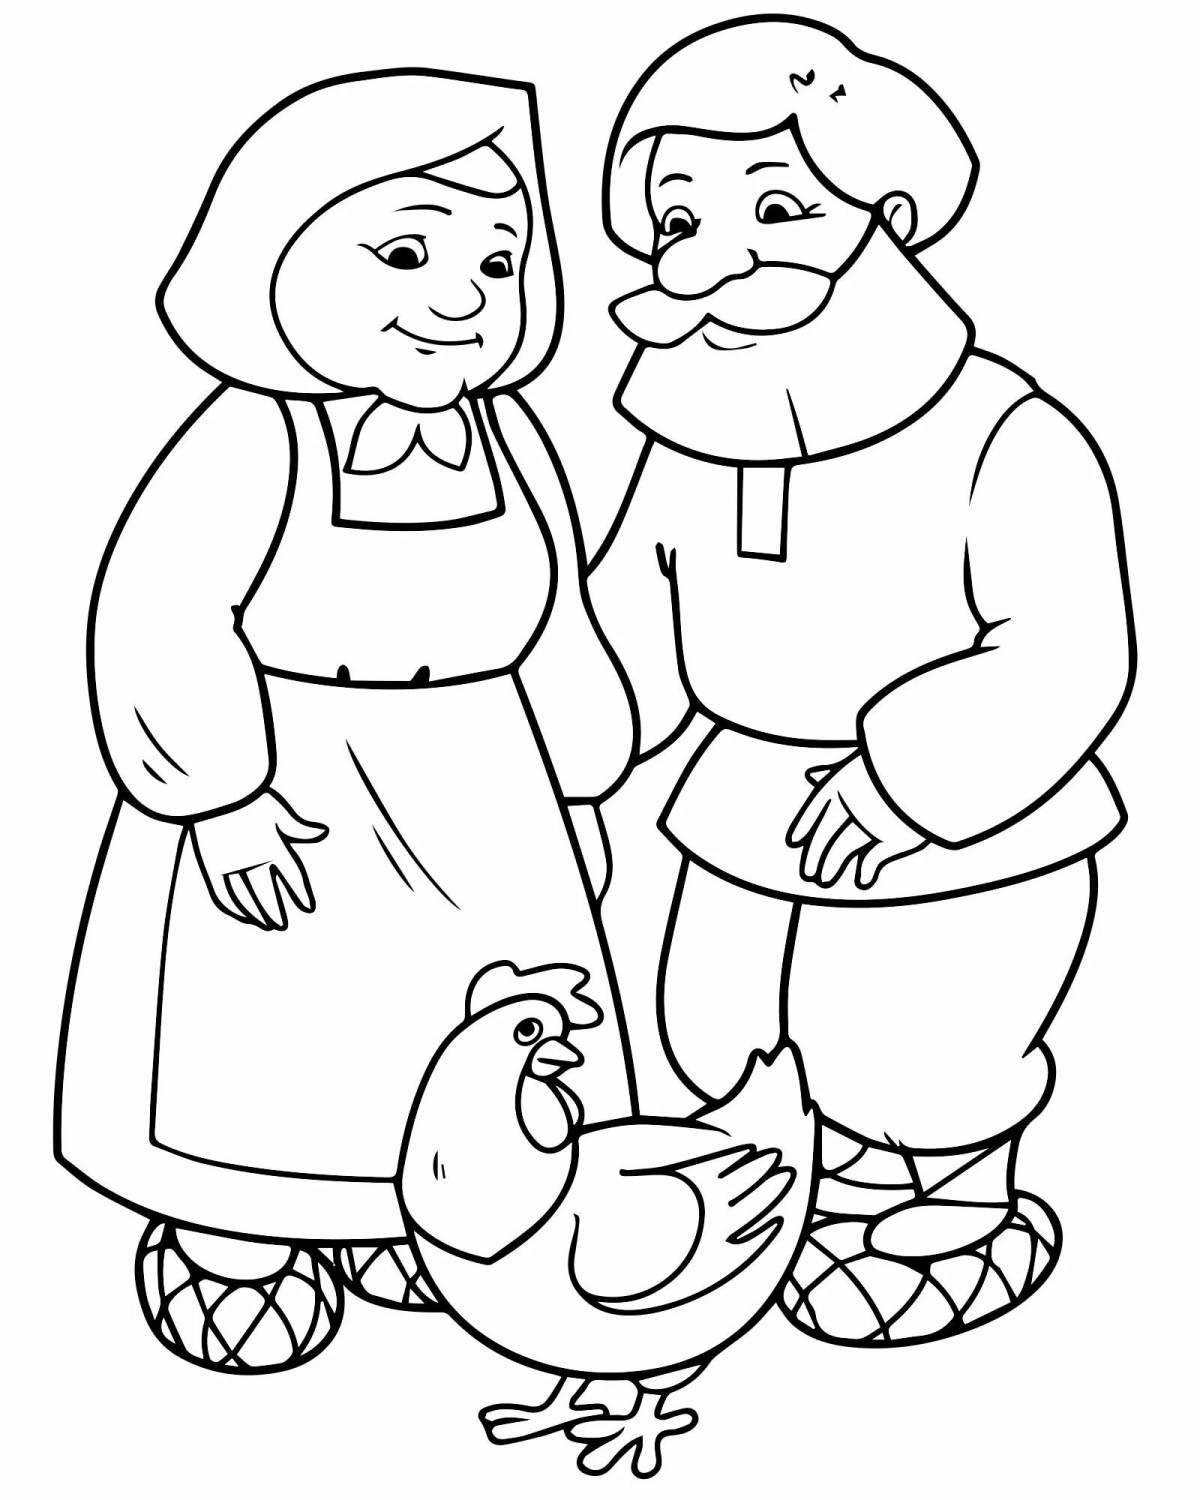 Refreshing Russian folk tales coloring book